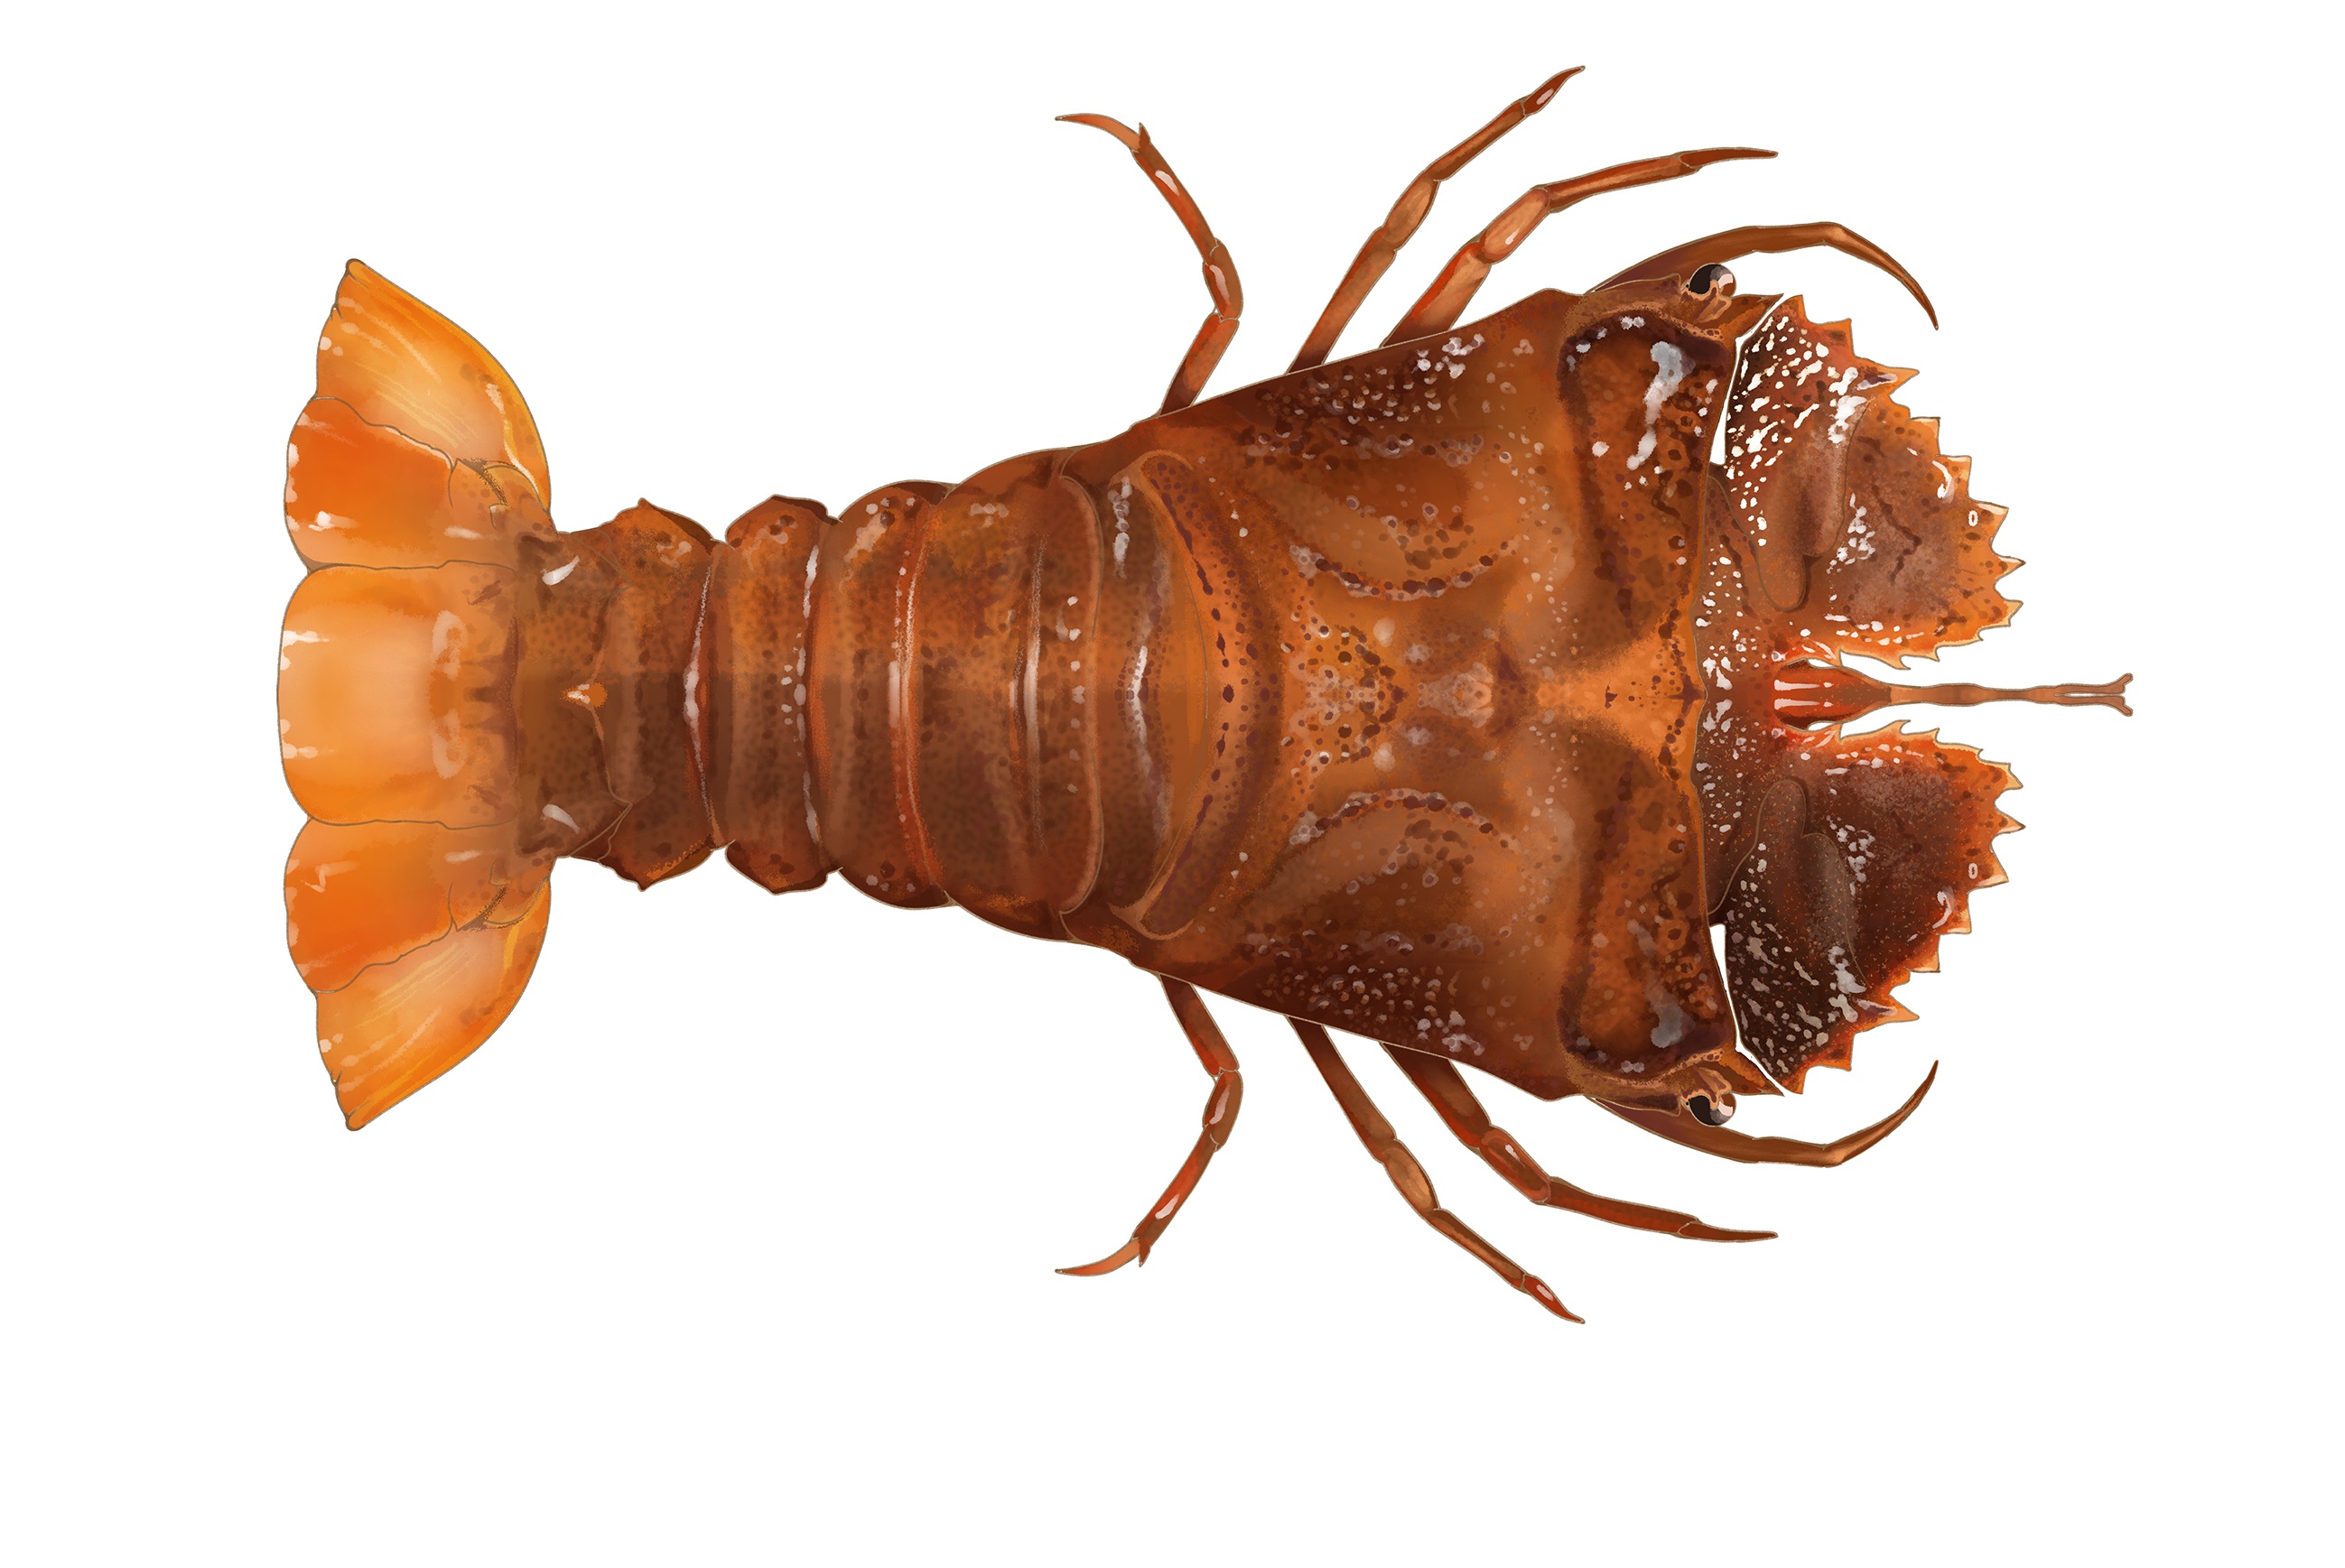 The Sculptured Slipper Lobster - Scuba Diver Life